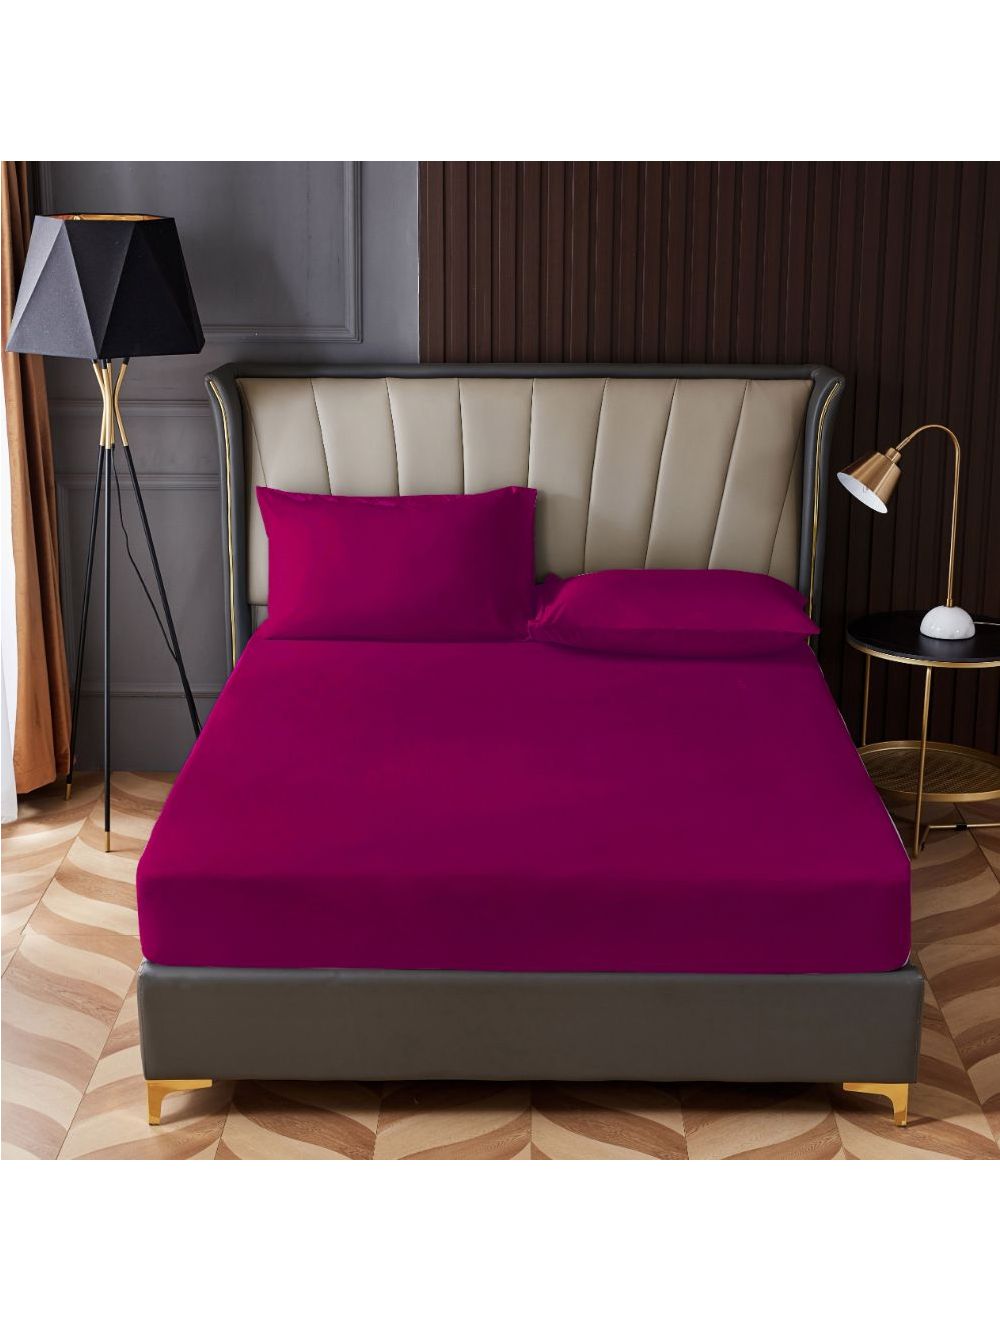 Rahalife 3-Piece Plum Coloured Microfiber Fitted Bedsheet Set Queen Size ( 1 Fitted Bedsheet + 2 Pillow Cases)-4BSMQP1038